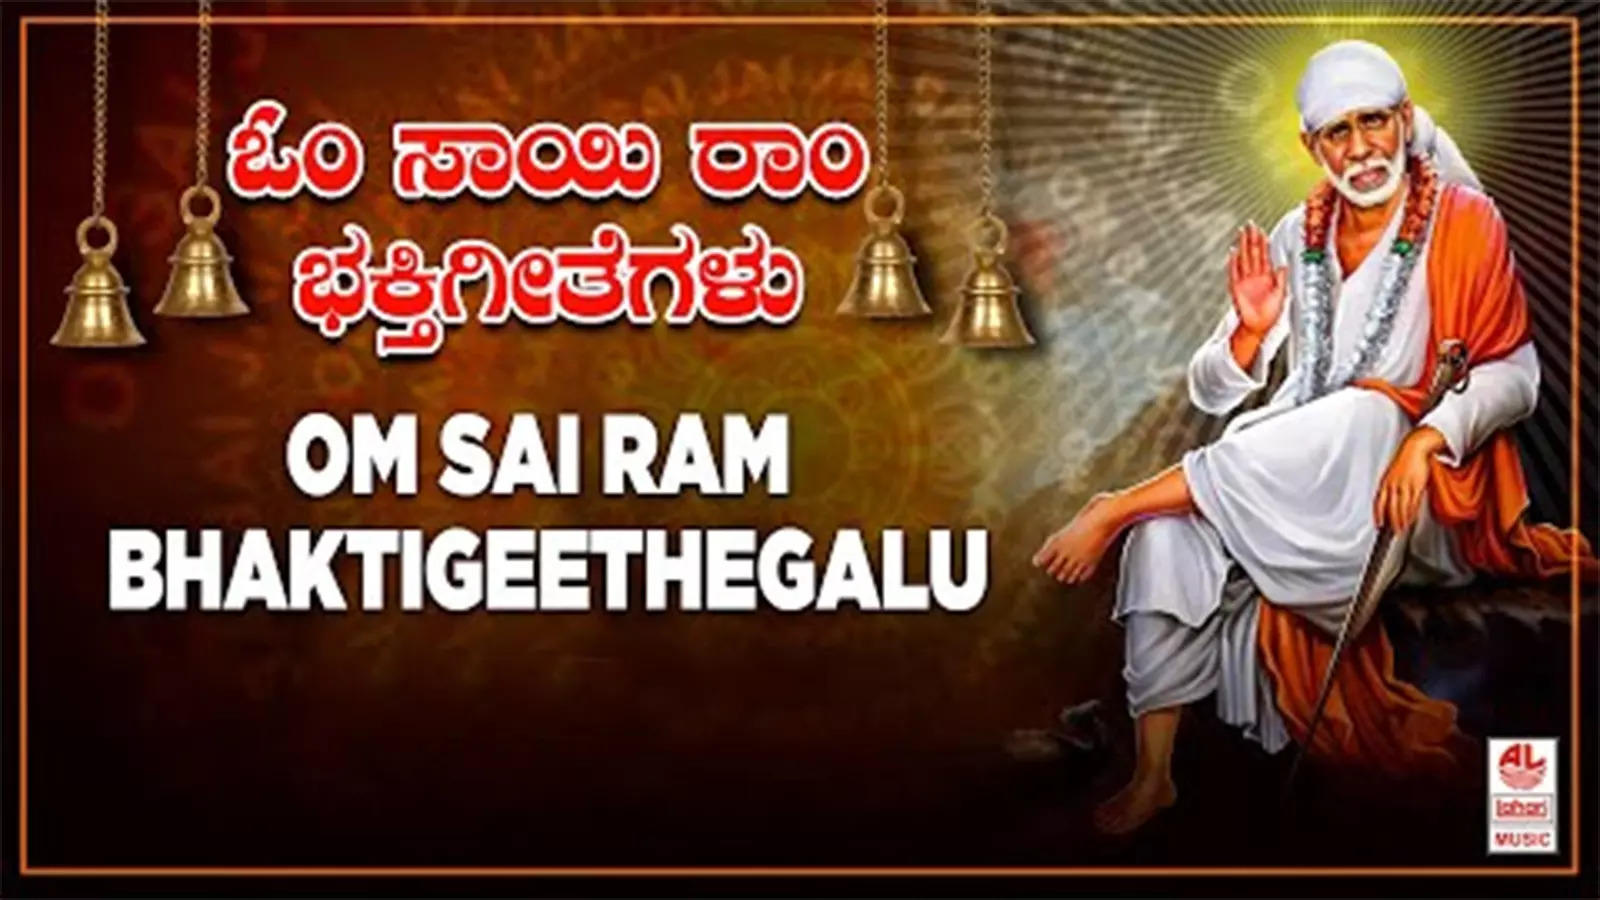 Om Sai Ram Bhakthi Geethegalu: Check Out Popular Kannada ...